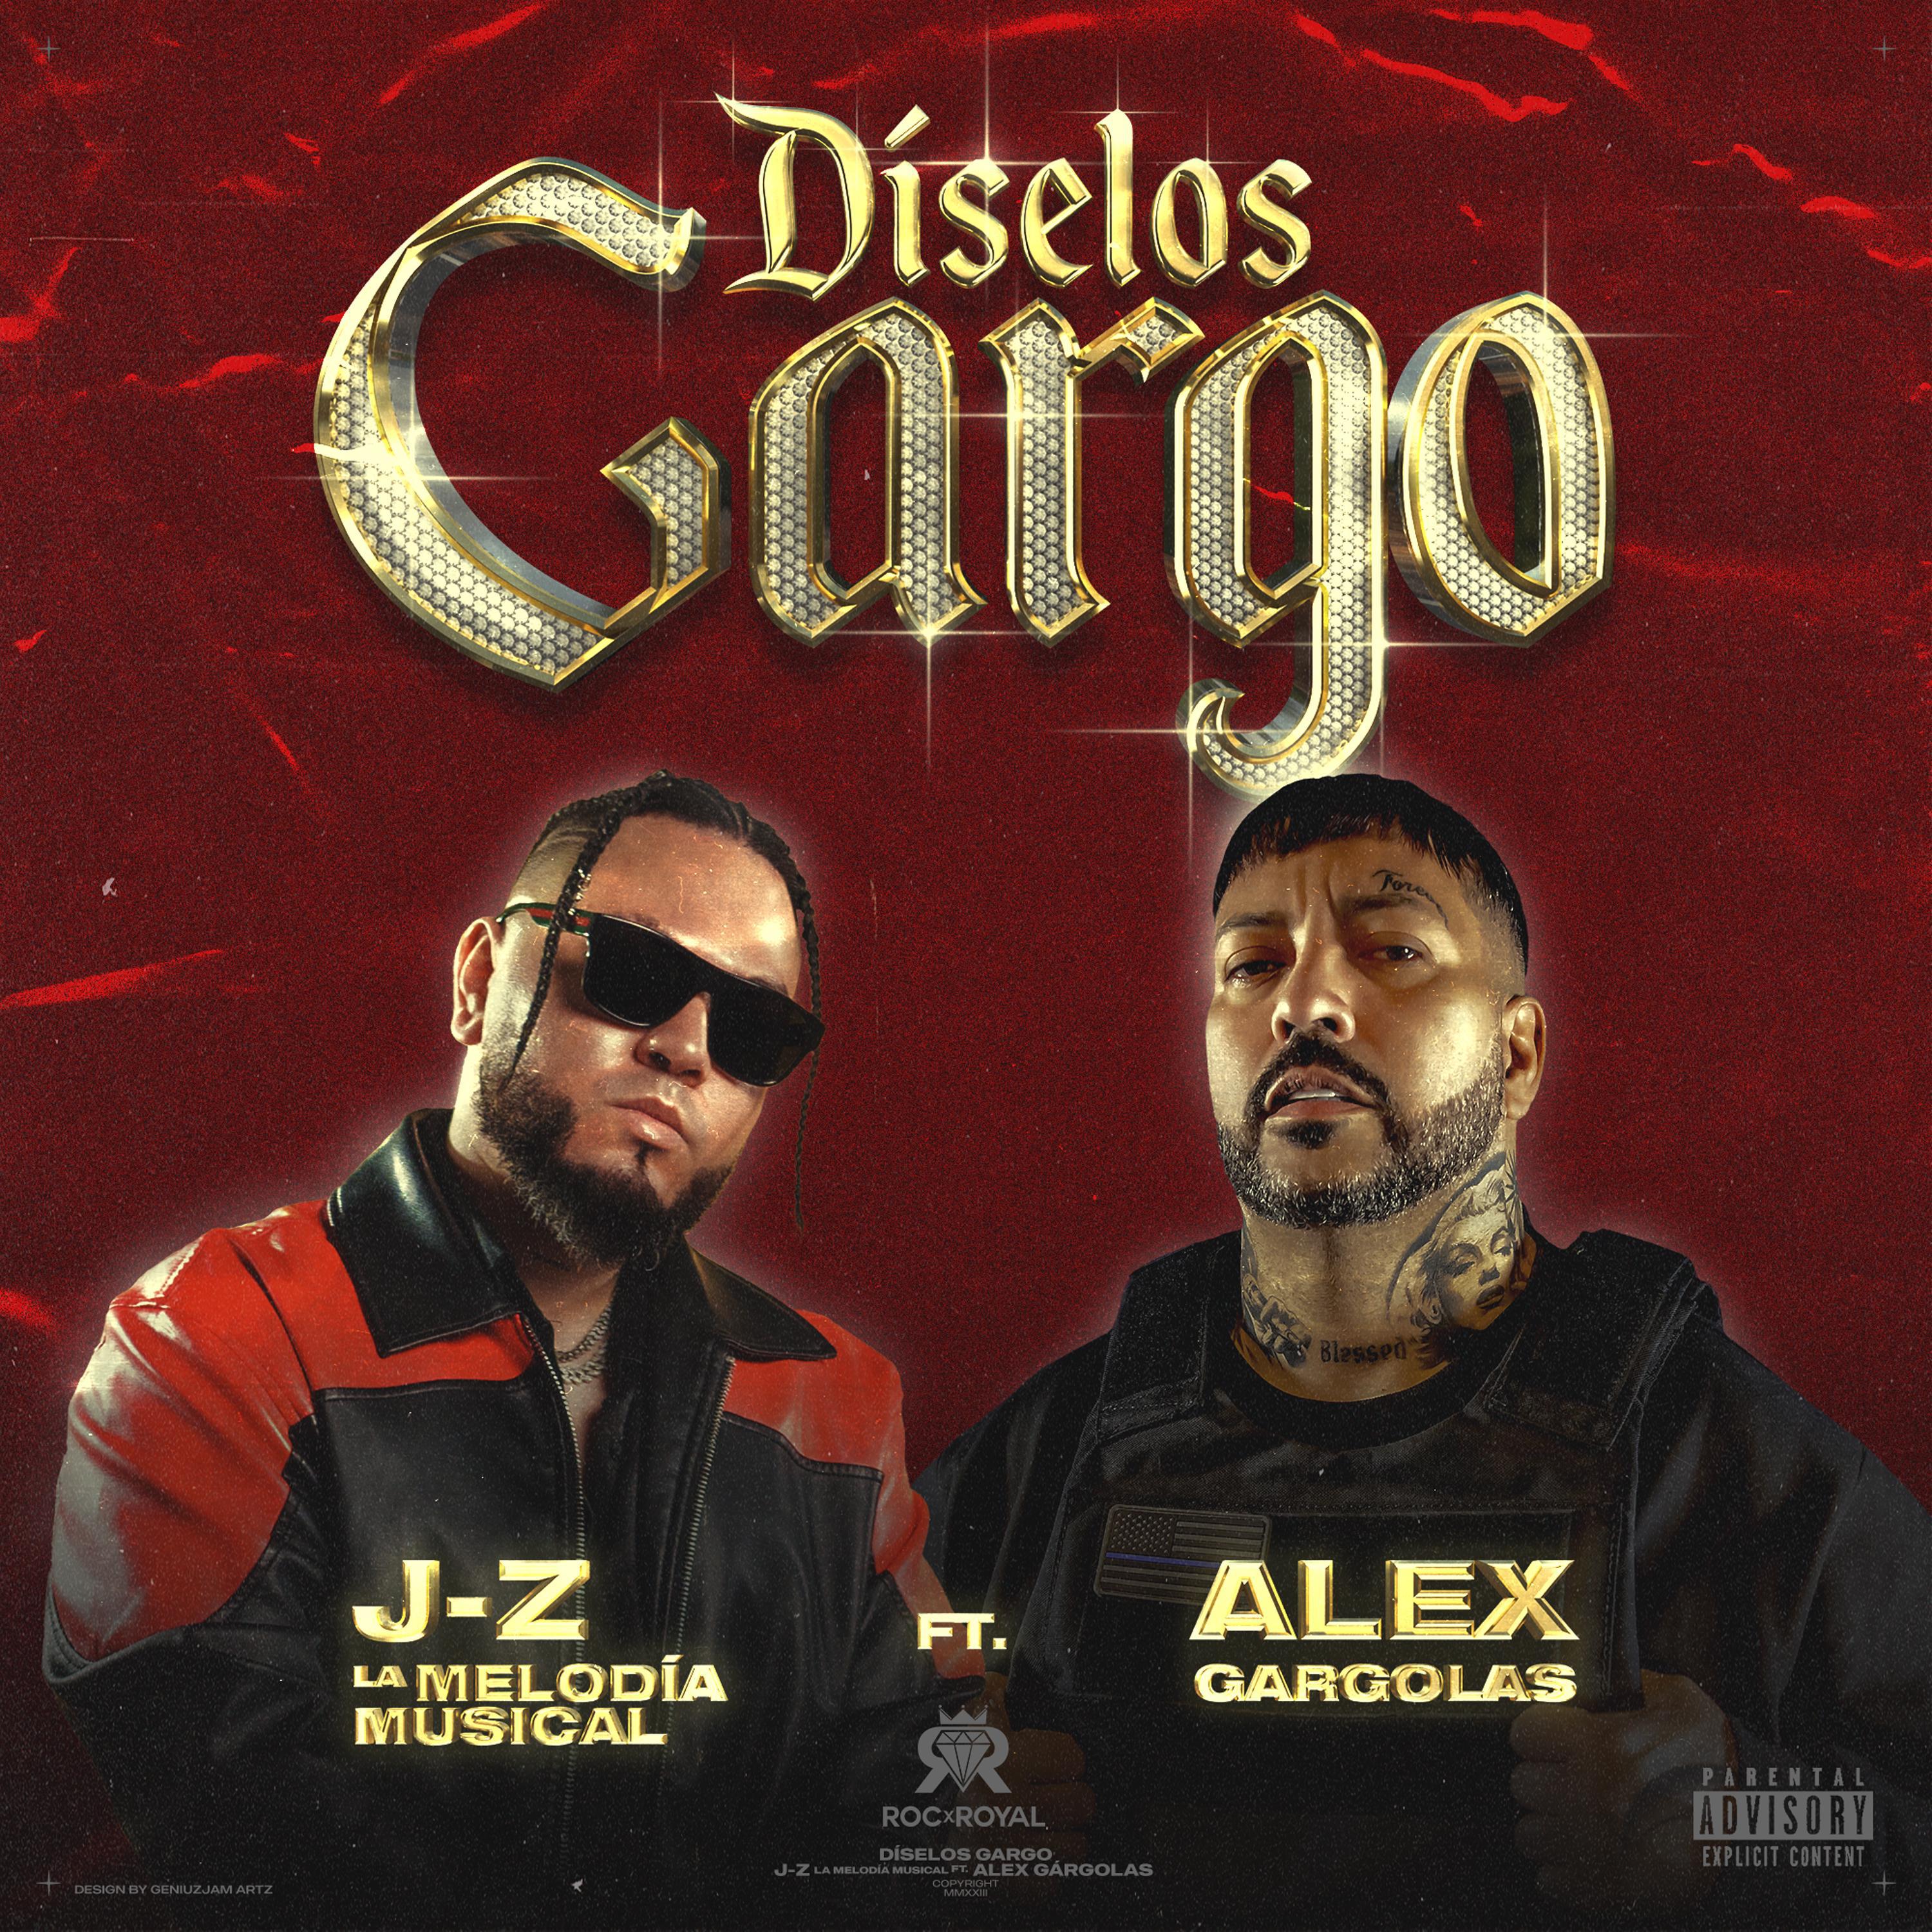 J-Z La Melodia Musical - Diselos Gargo (feat. Alex Gargolas)